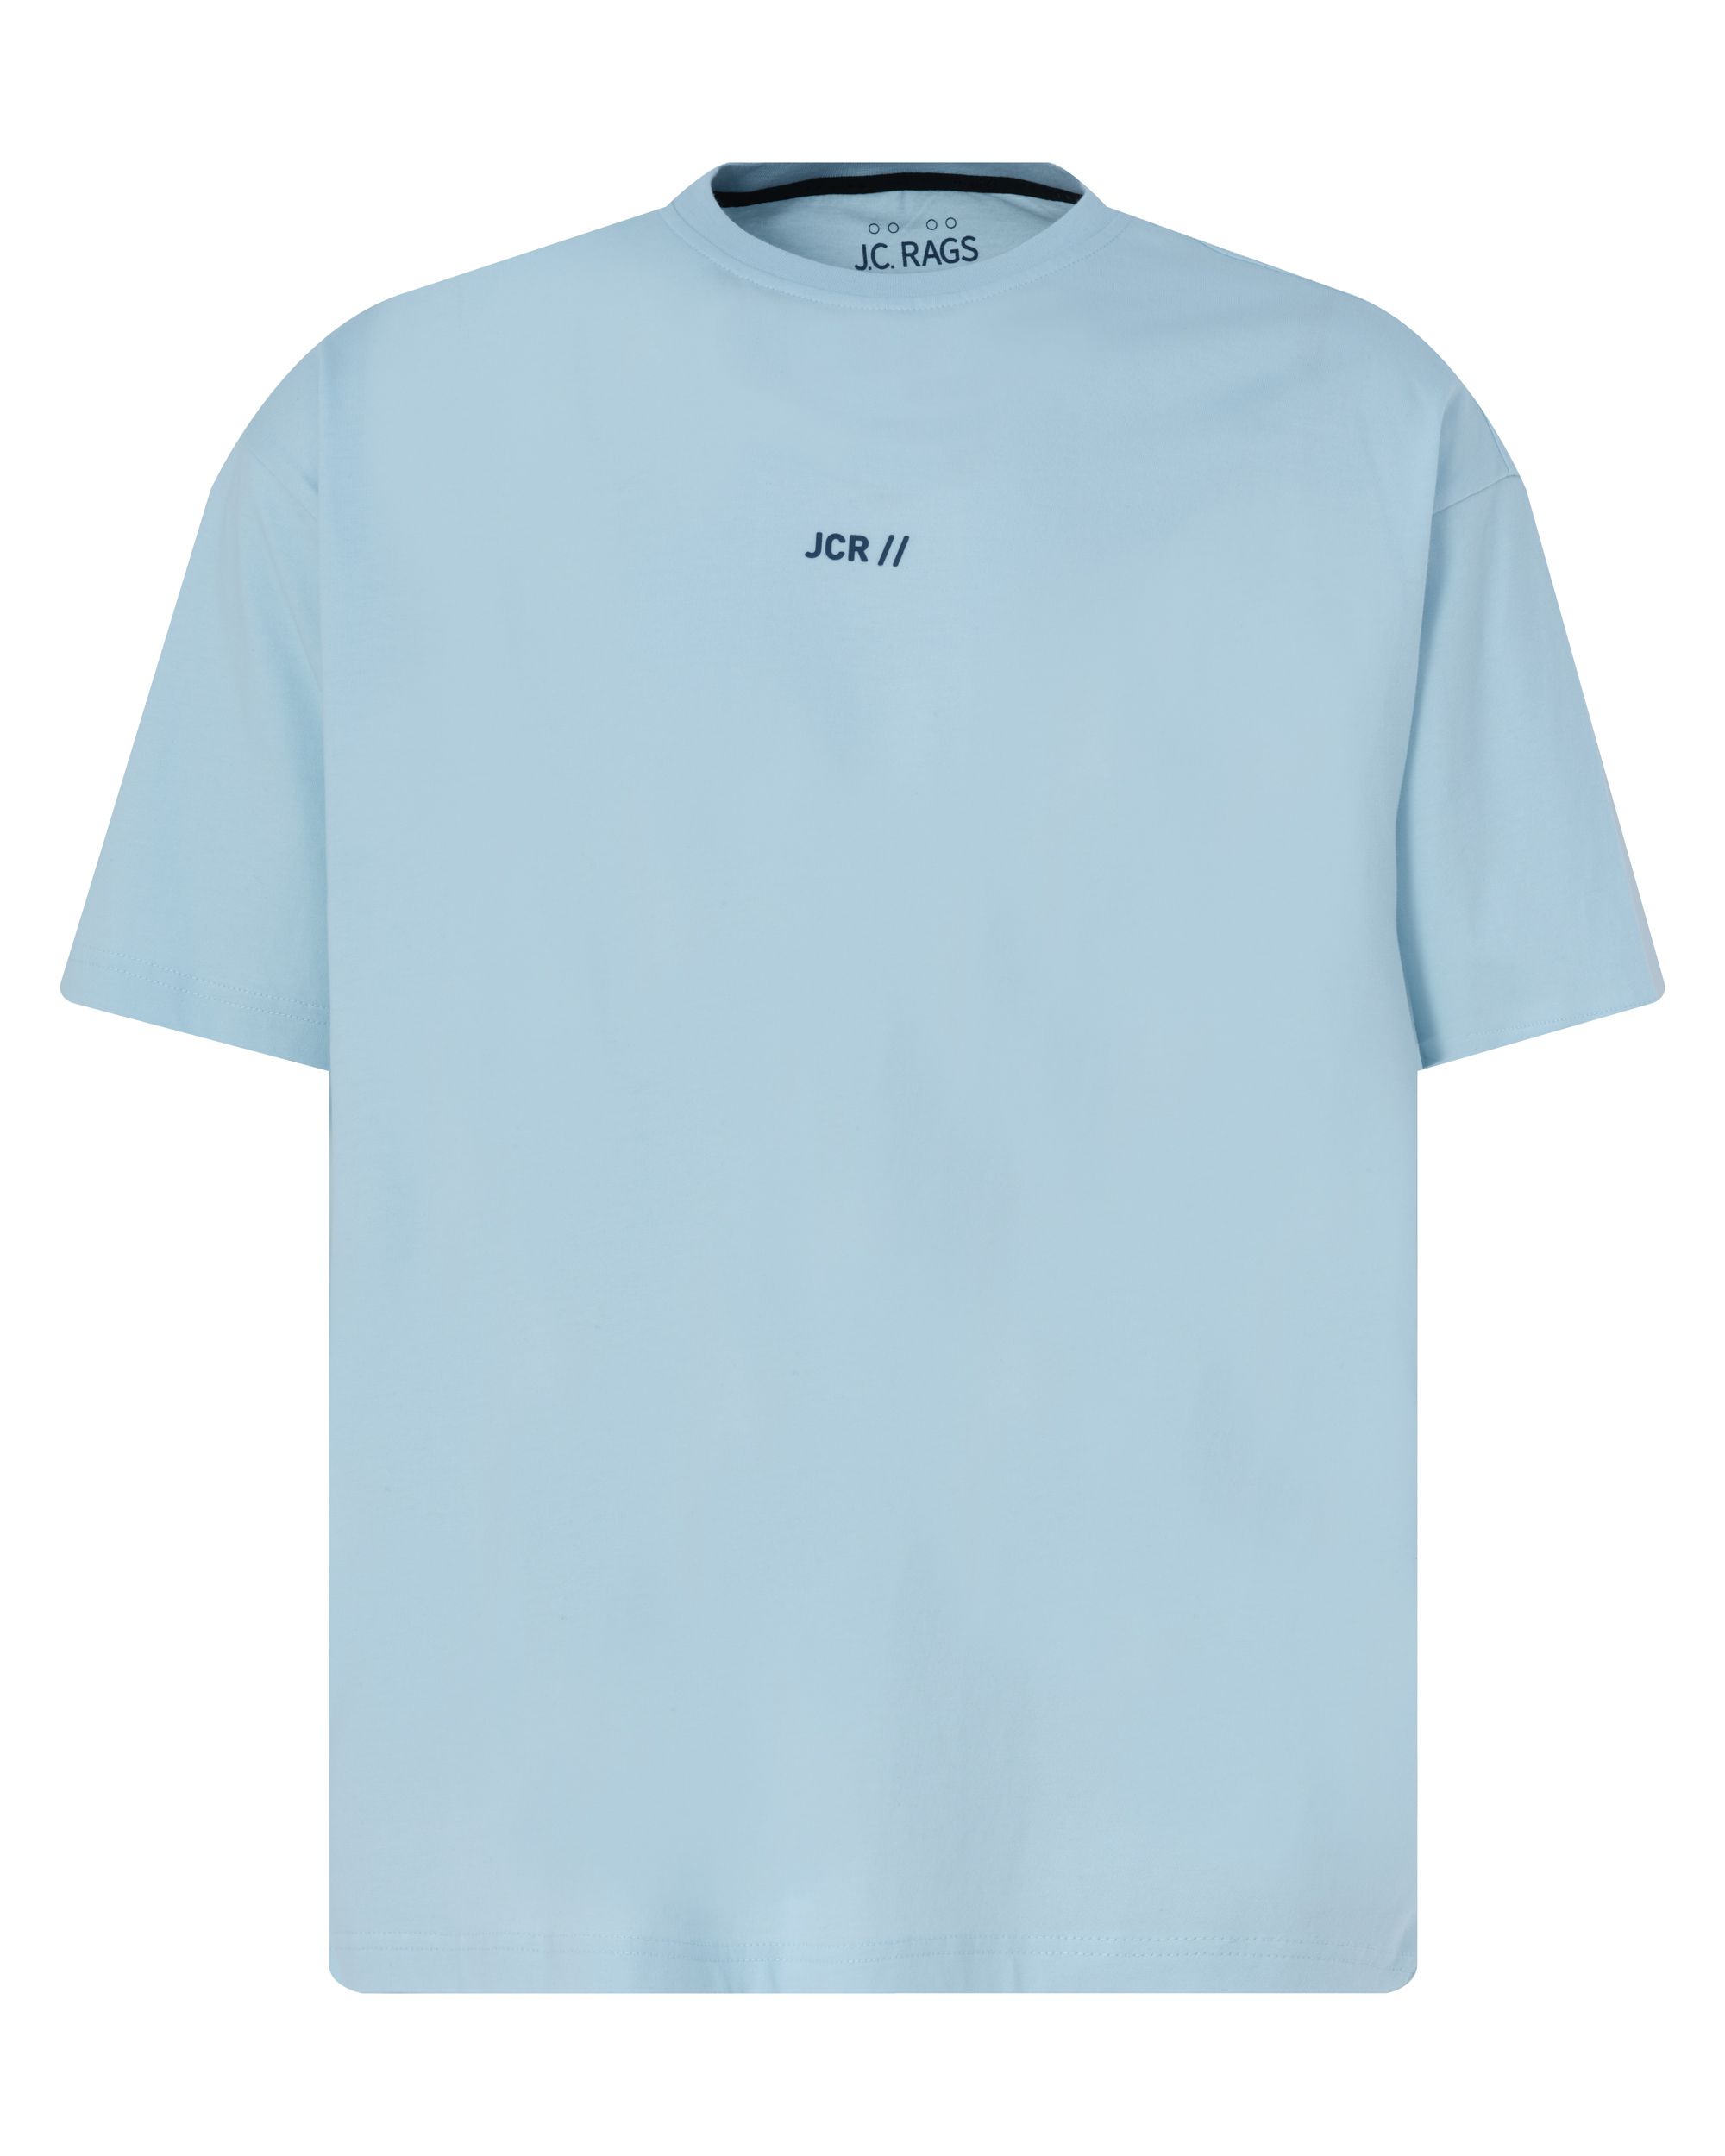 J.C. RAGS Tony T-shirt KM Baby blue 089170-001-L